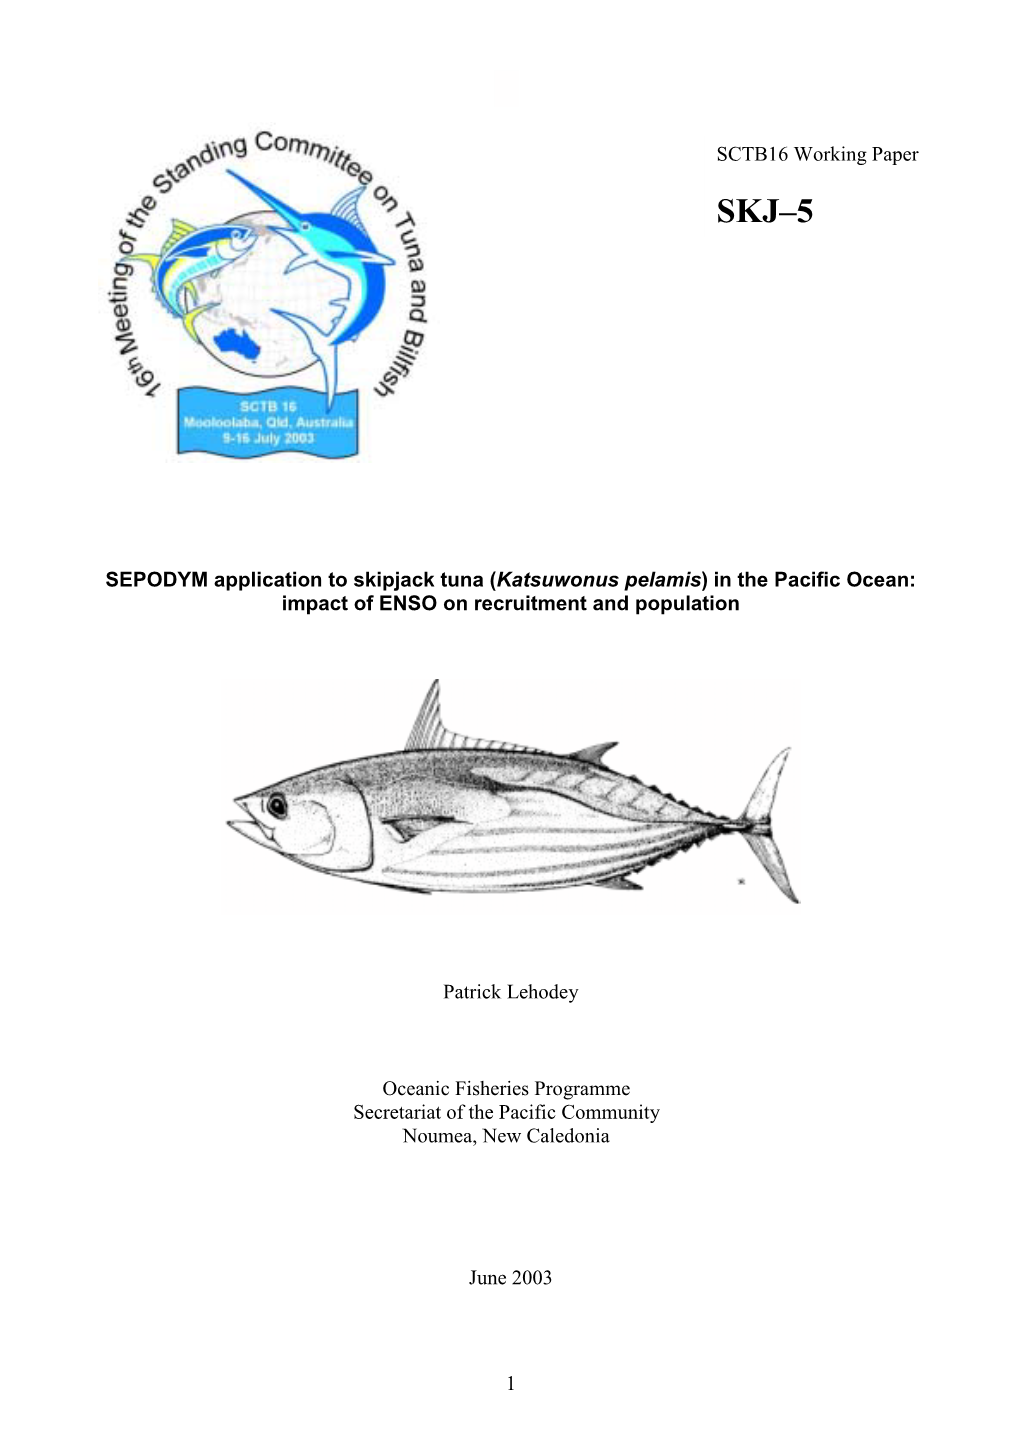 SEPODYM Application to Skipjack Tuna (&lt;I&gt;Katsuwonus Pelamis&lt;/I&gt;) in the Pacific Ocean: Impact of ENSO on Recruitment